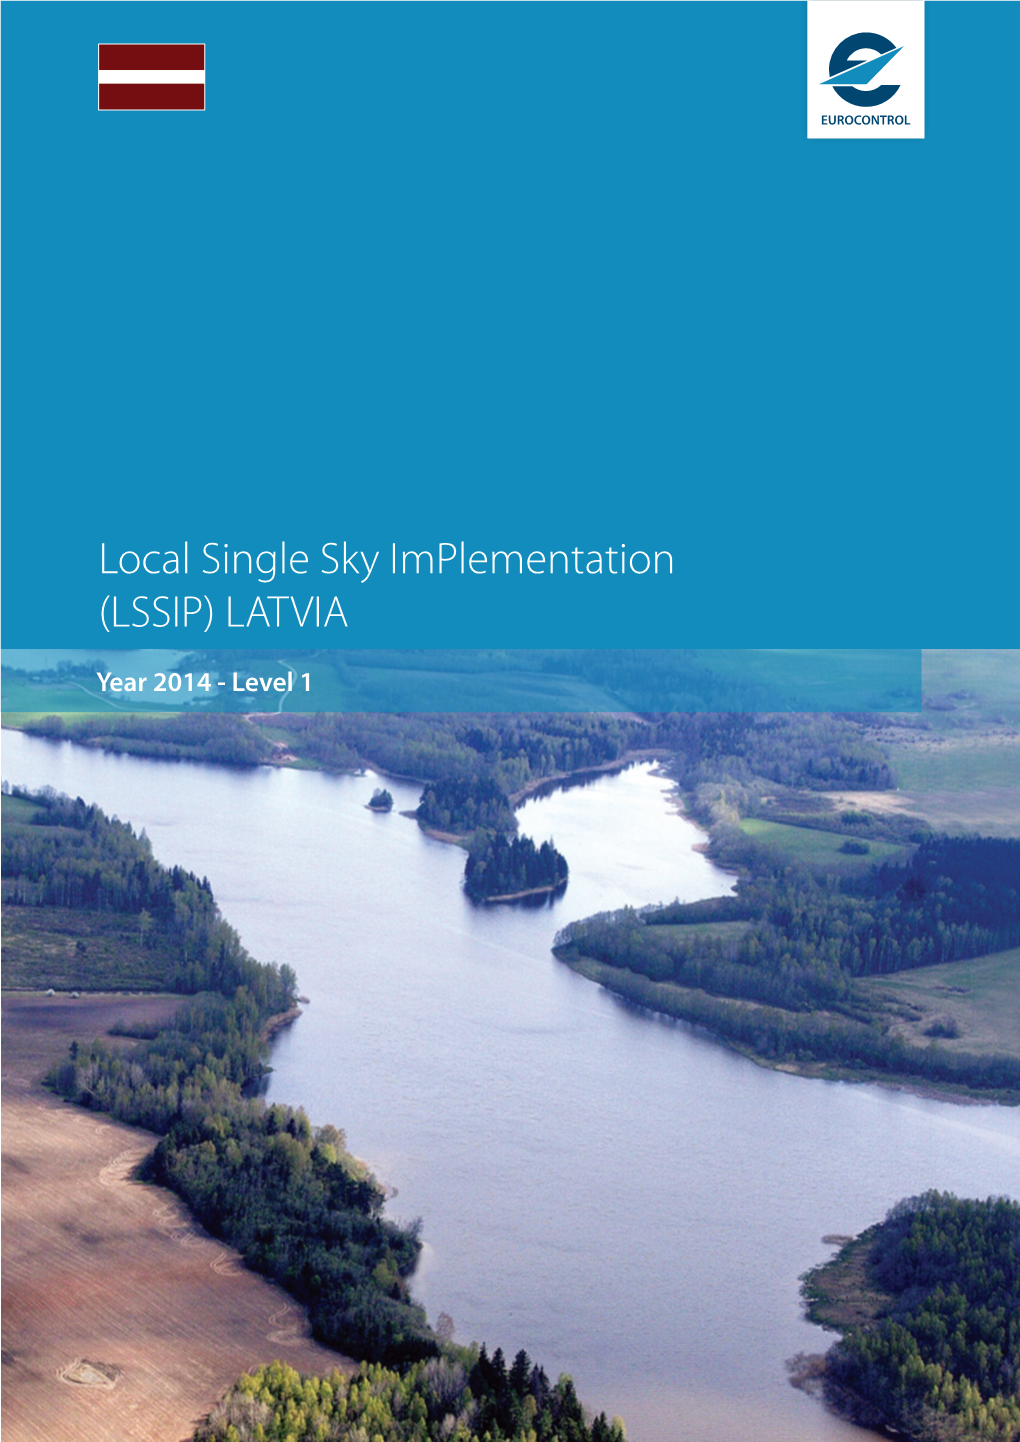 Local Single Sky Implementation (LSSIP) LATVIA